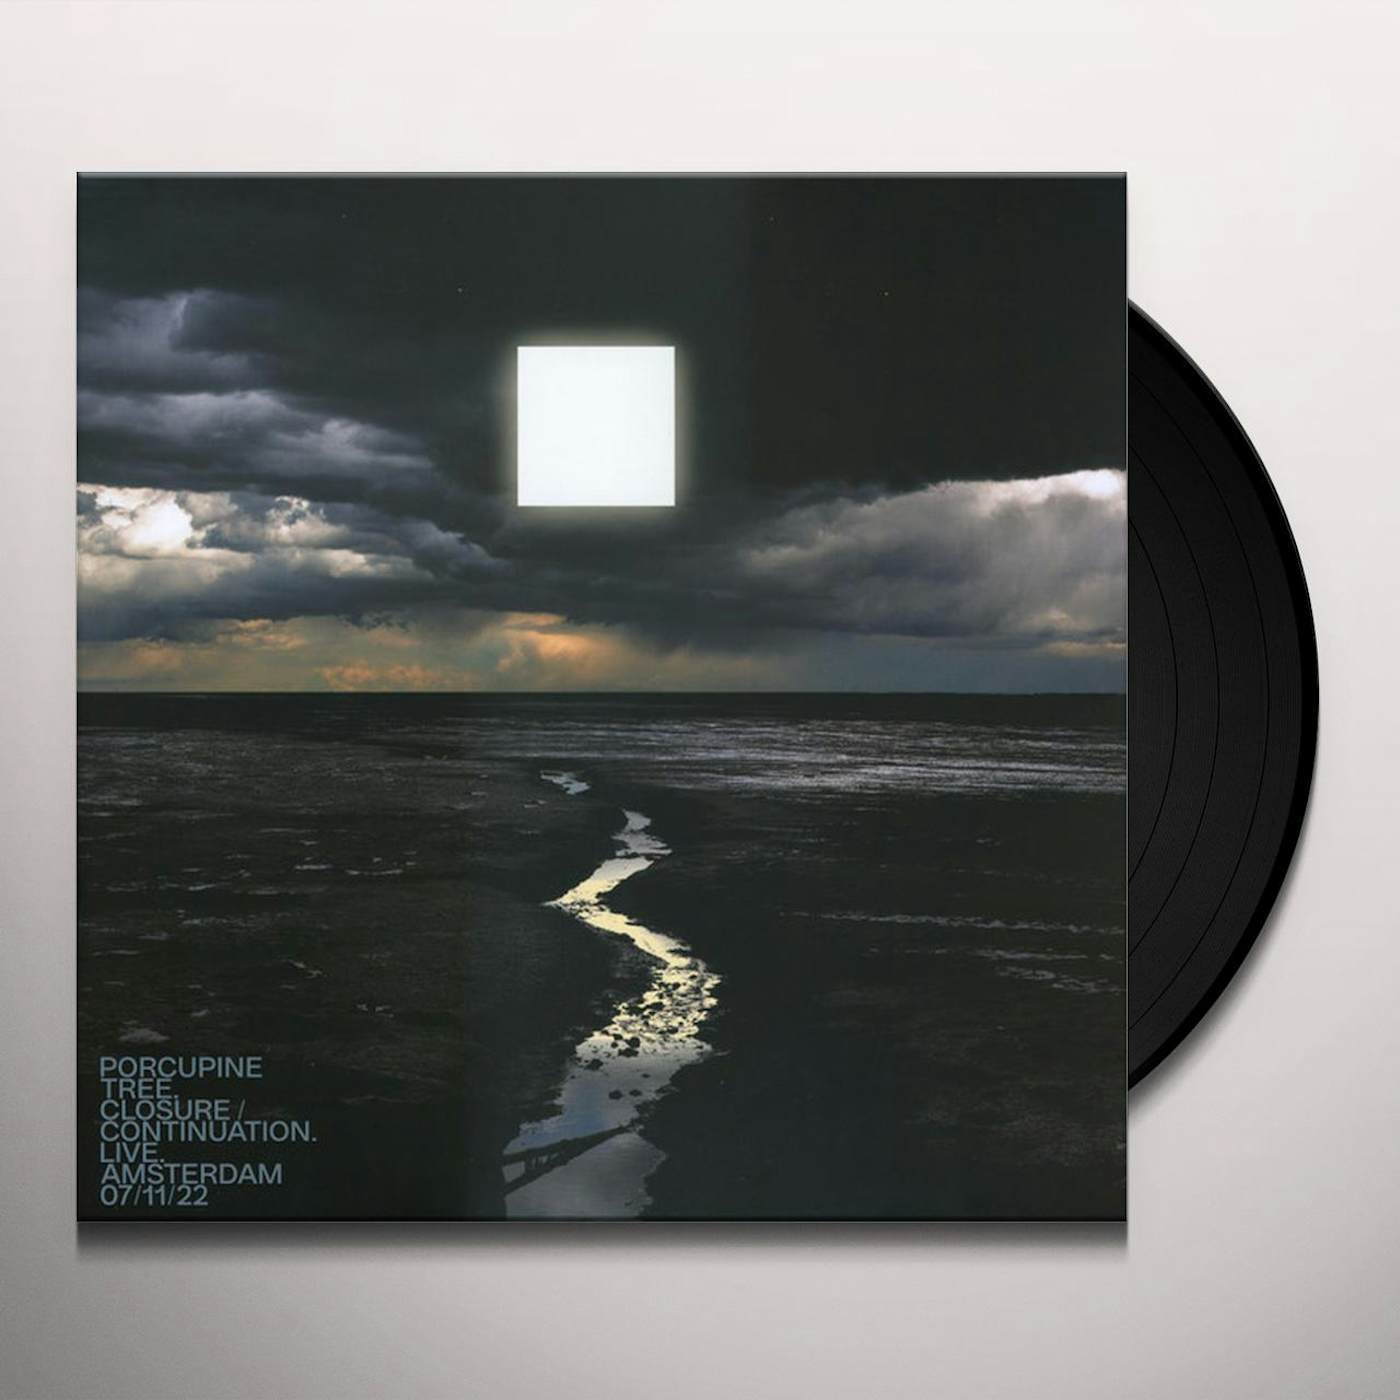 Porcupine Tree CLOSURE / CONTINUATION: LIVE AMSTERDAM 07/11/22 Vinyl Record